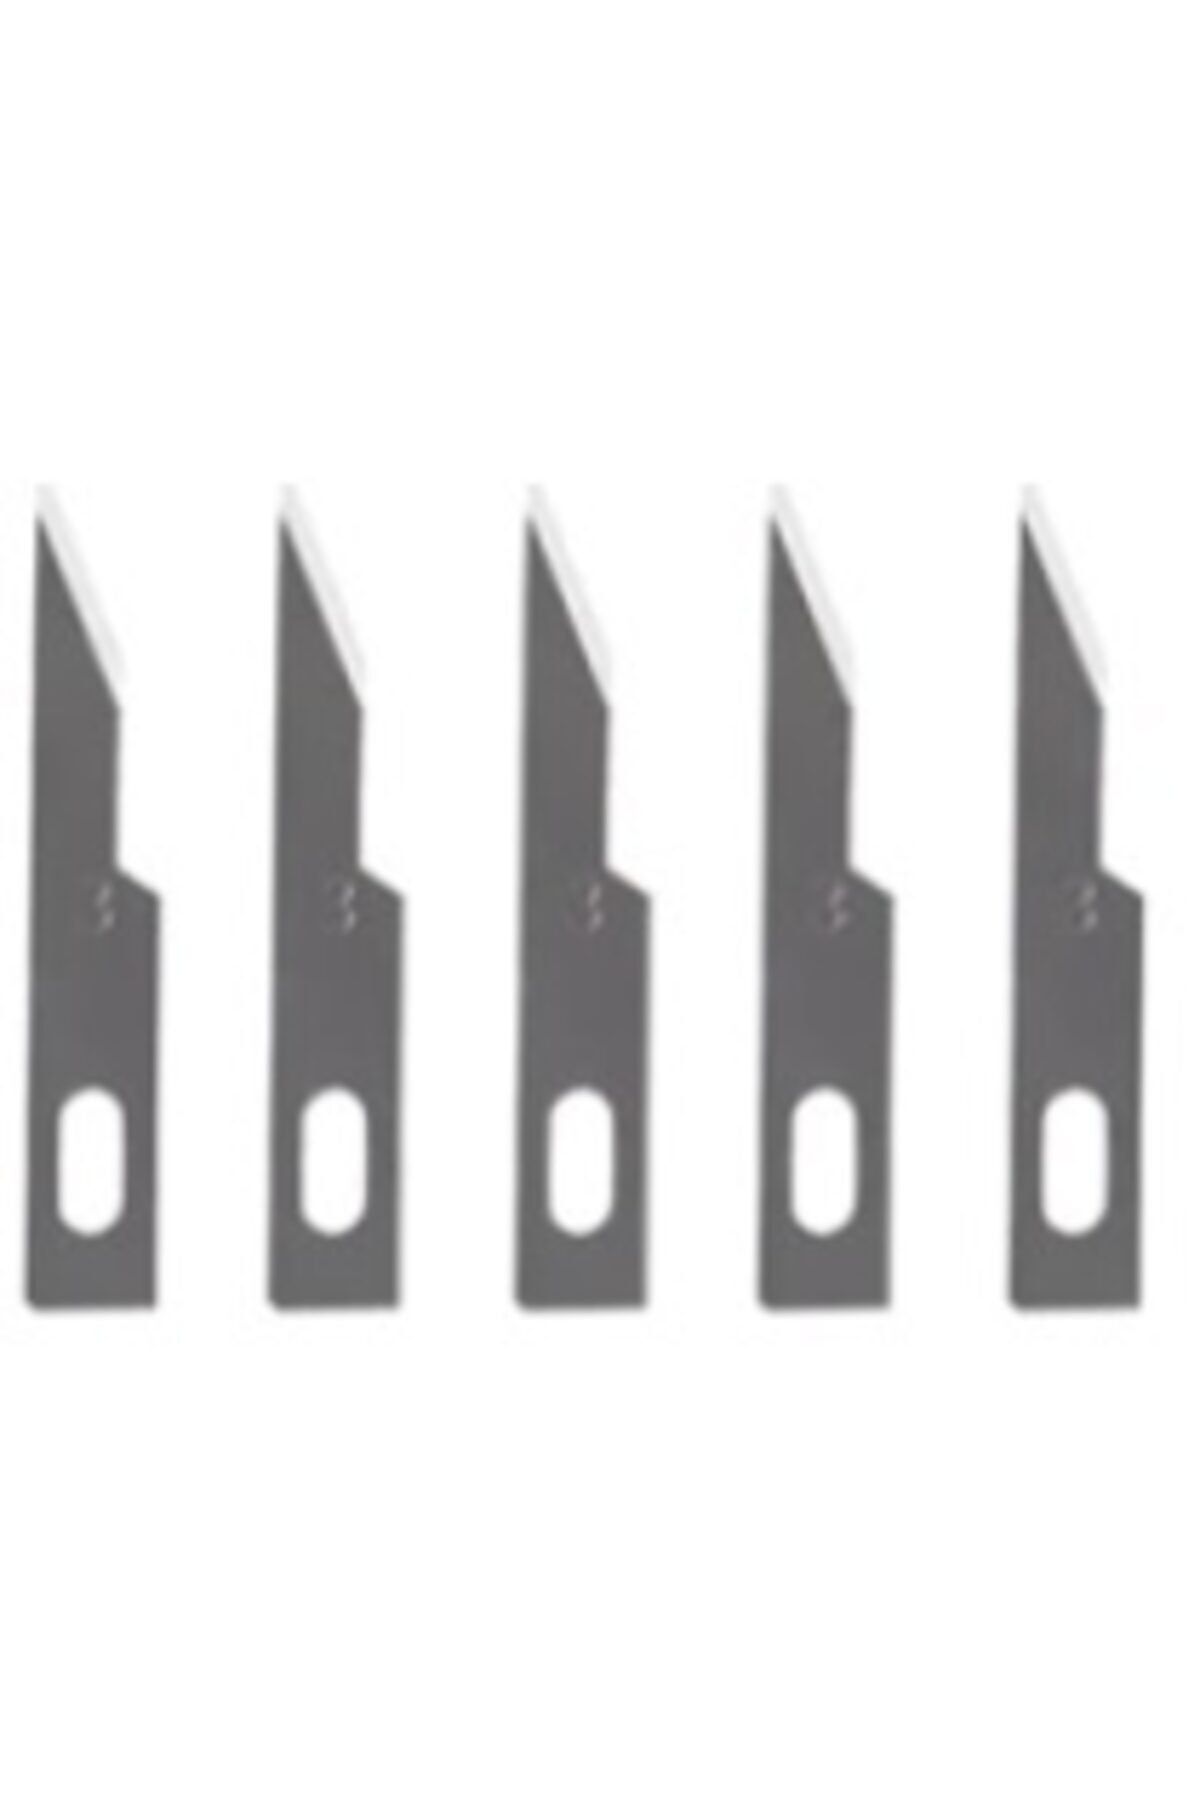 Kırkyama Patchwork Home Ahşap Heykel Oyma Neşter Sanat Yedek Bıçağı (10 ADET - 3 NUMARA) Bisturi Tipi